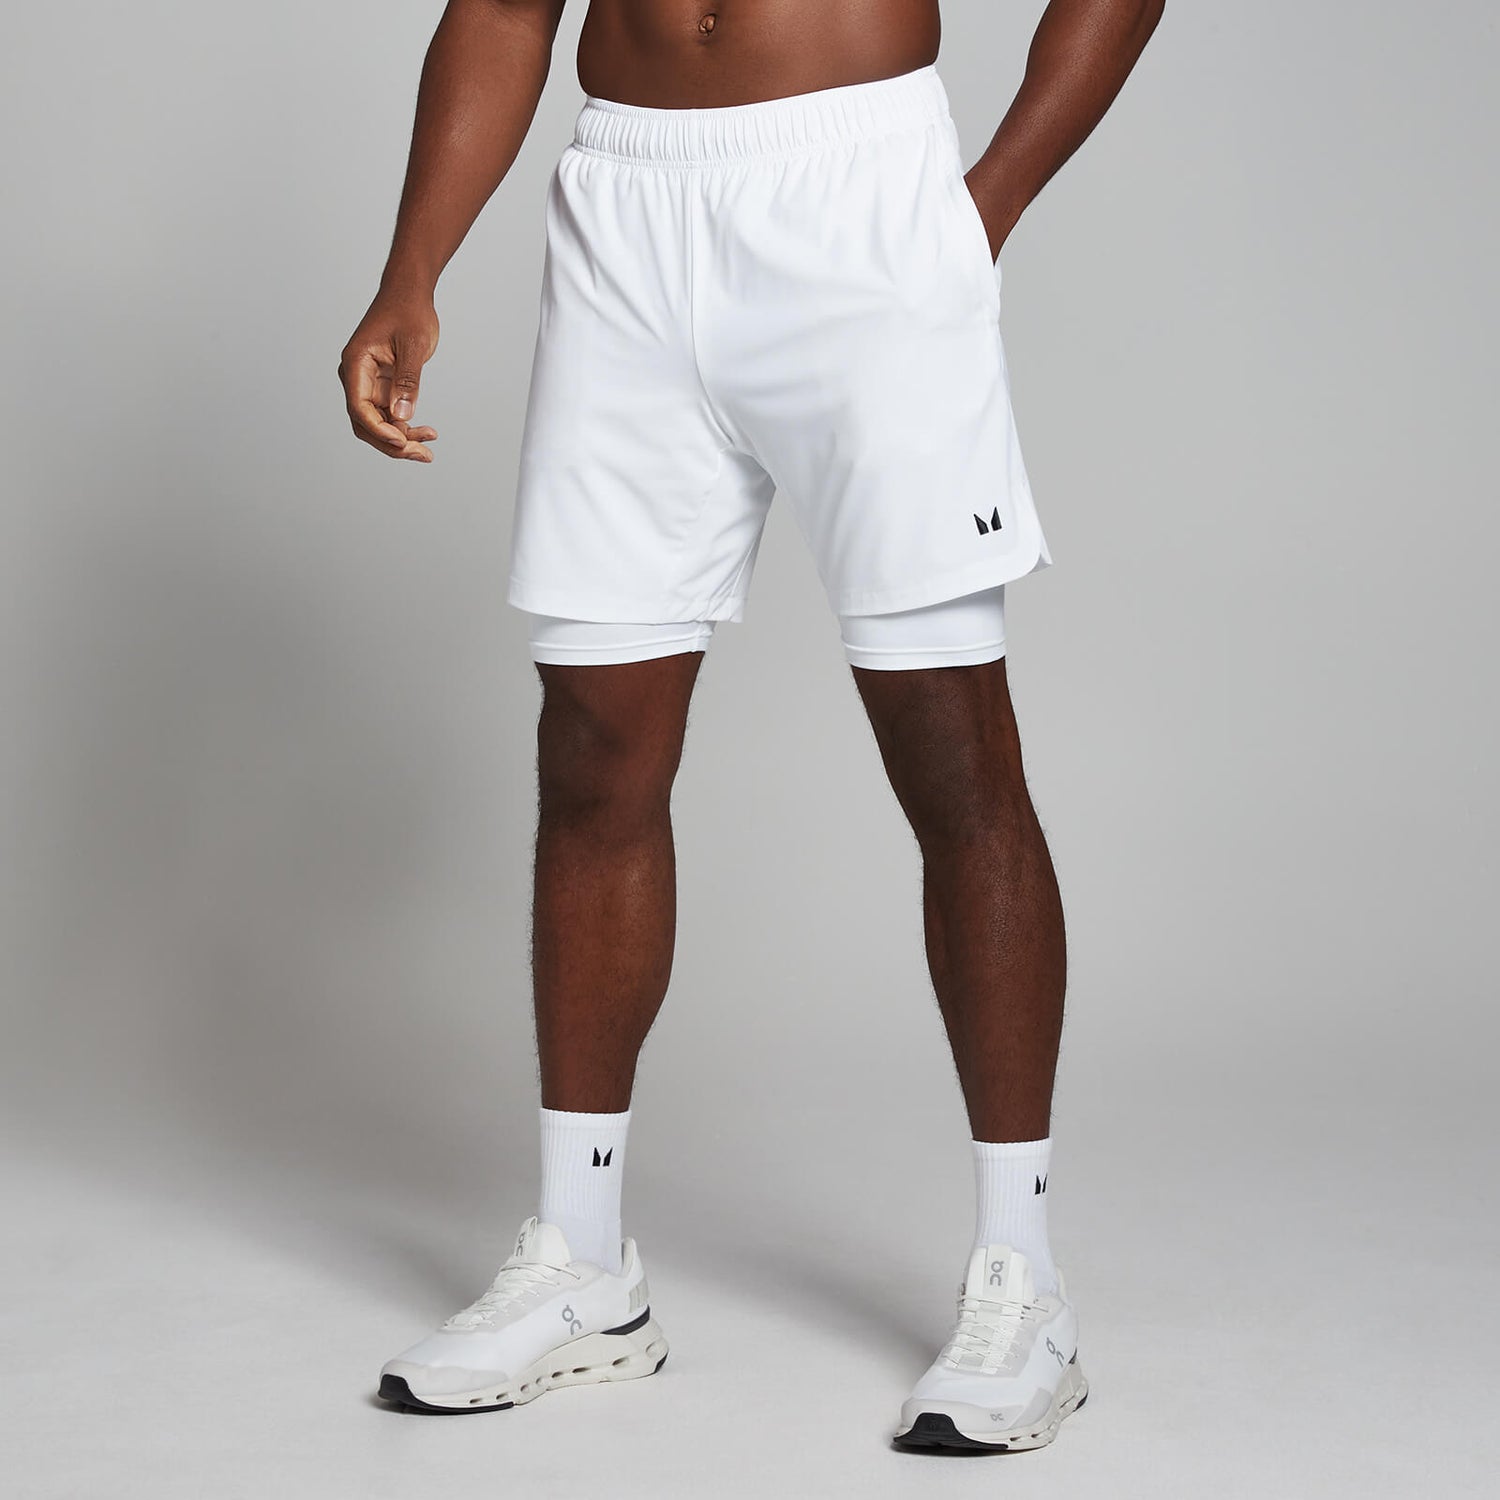 MP Men's 2-in-1 Training Shorts - White - XS